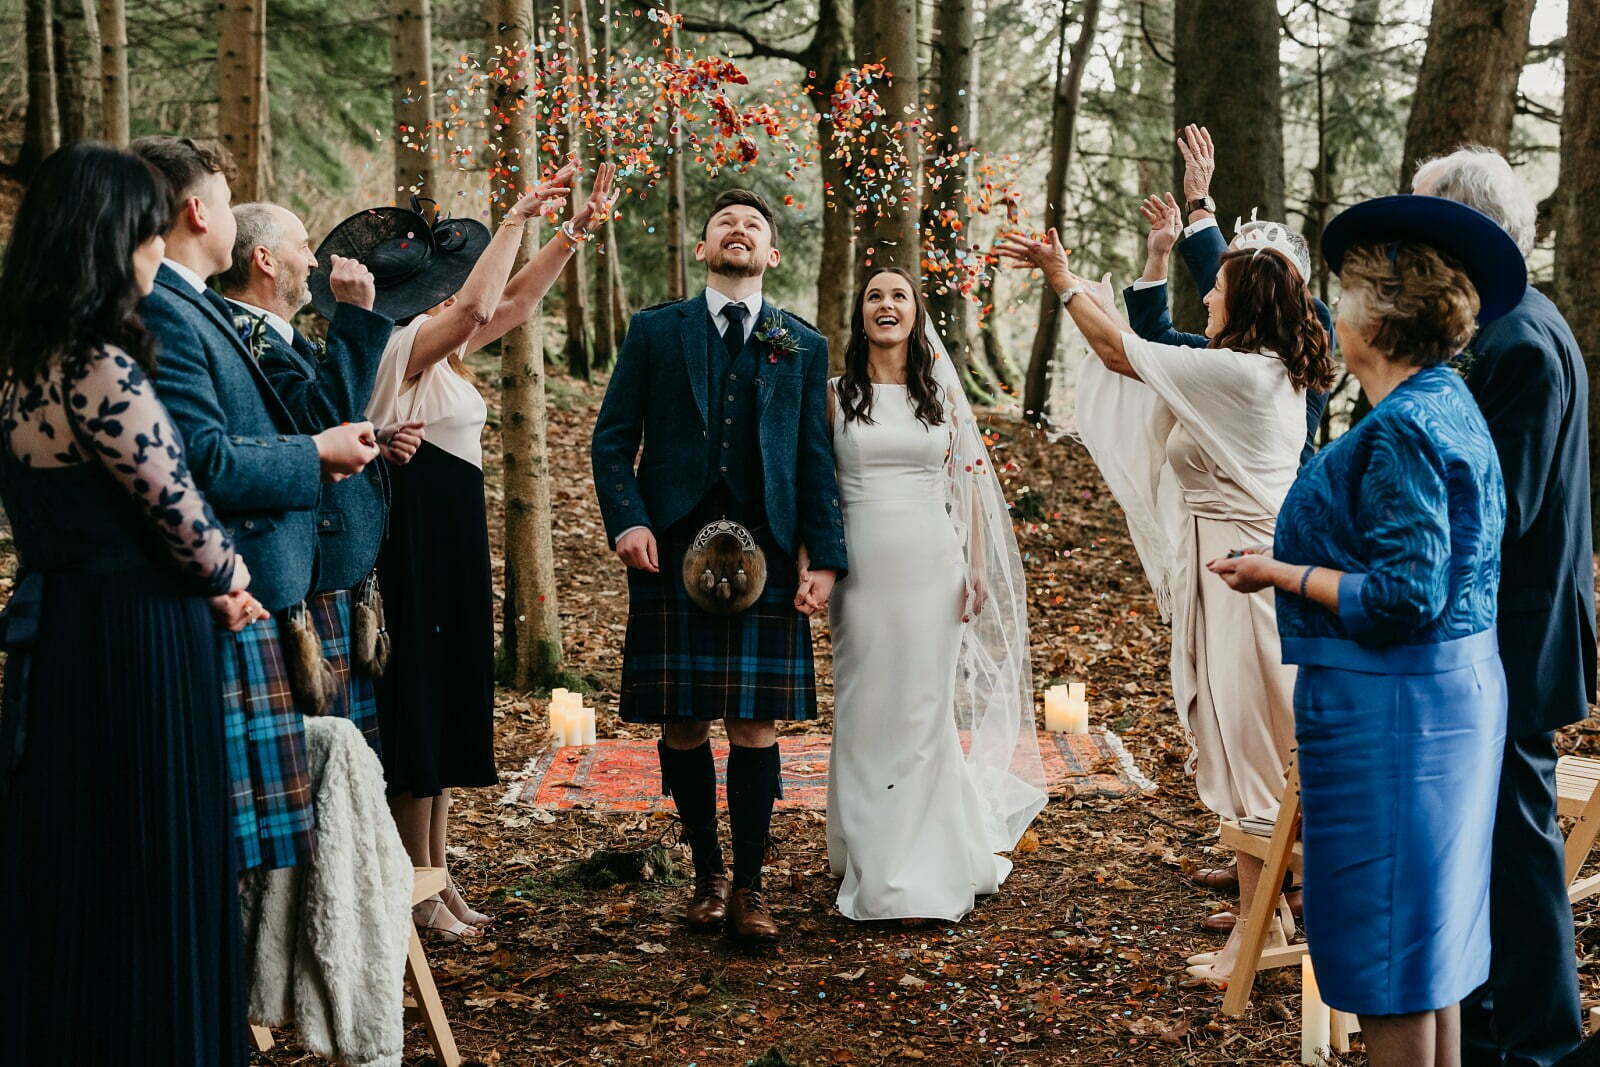 micro wedding planner scotland at glen dye estate and cabins luxury woodland wedding ceremony aberdeenshire bride groom confetti throw